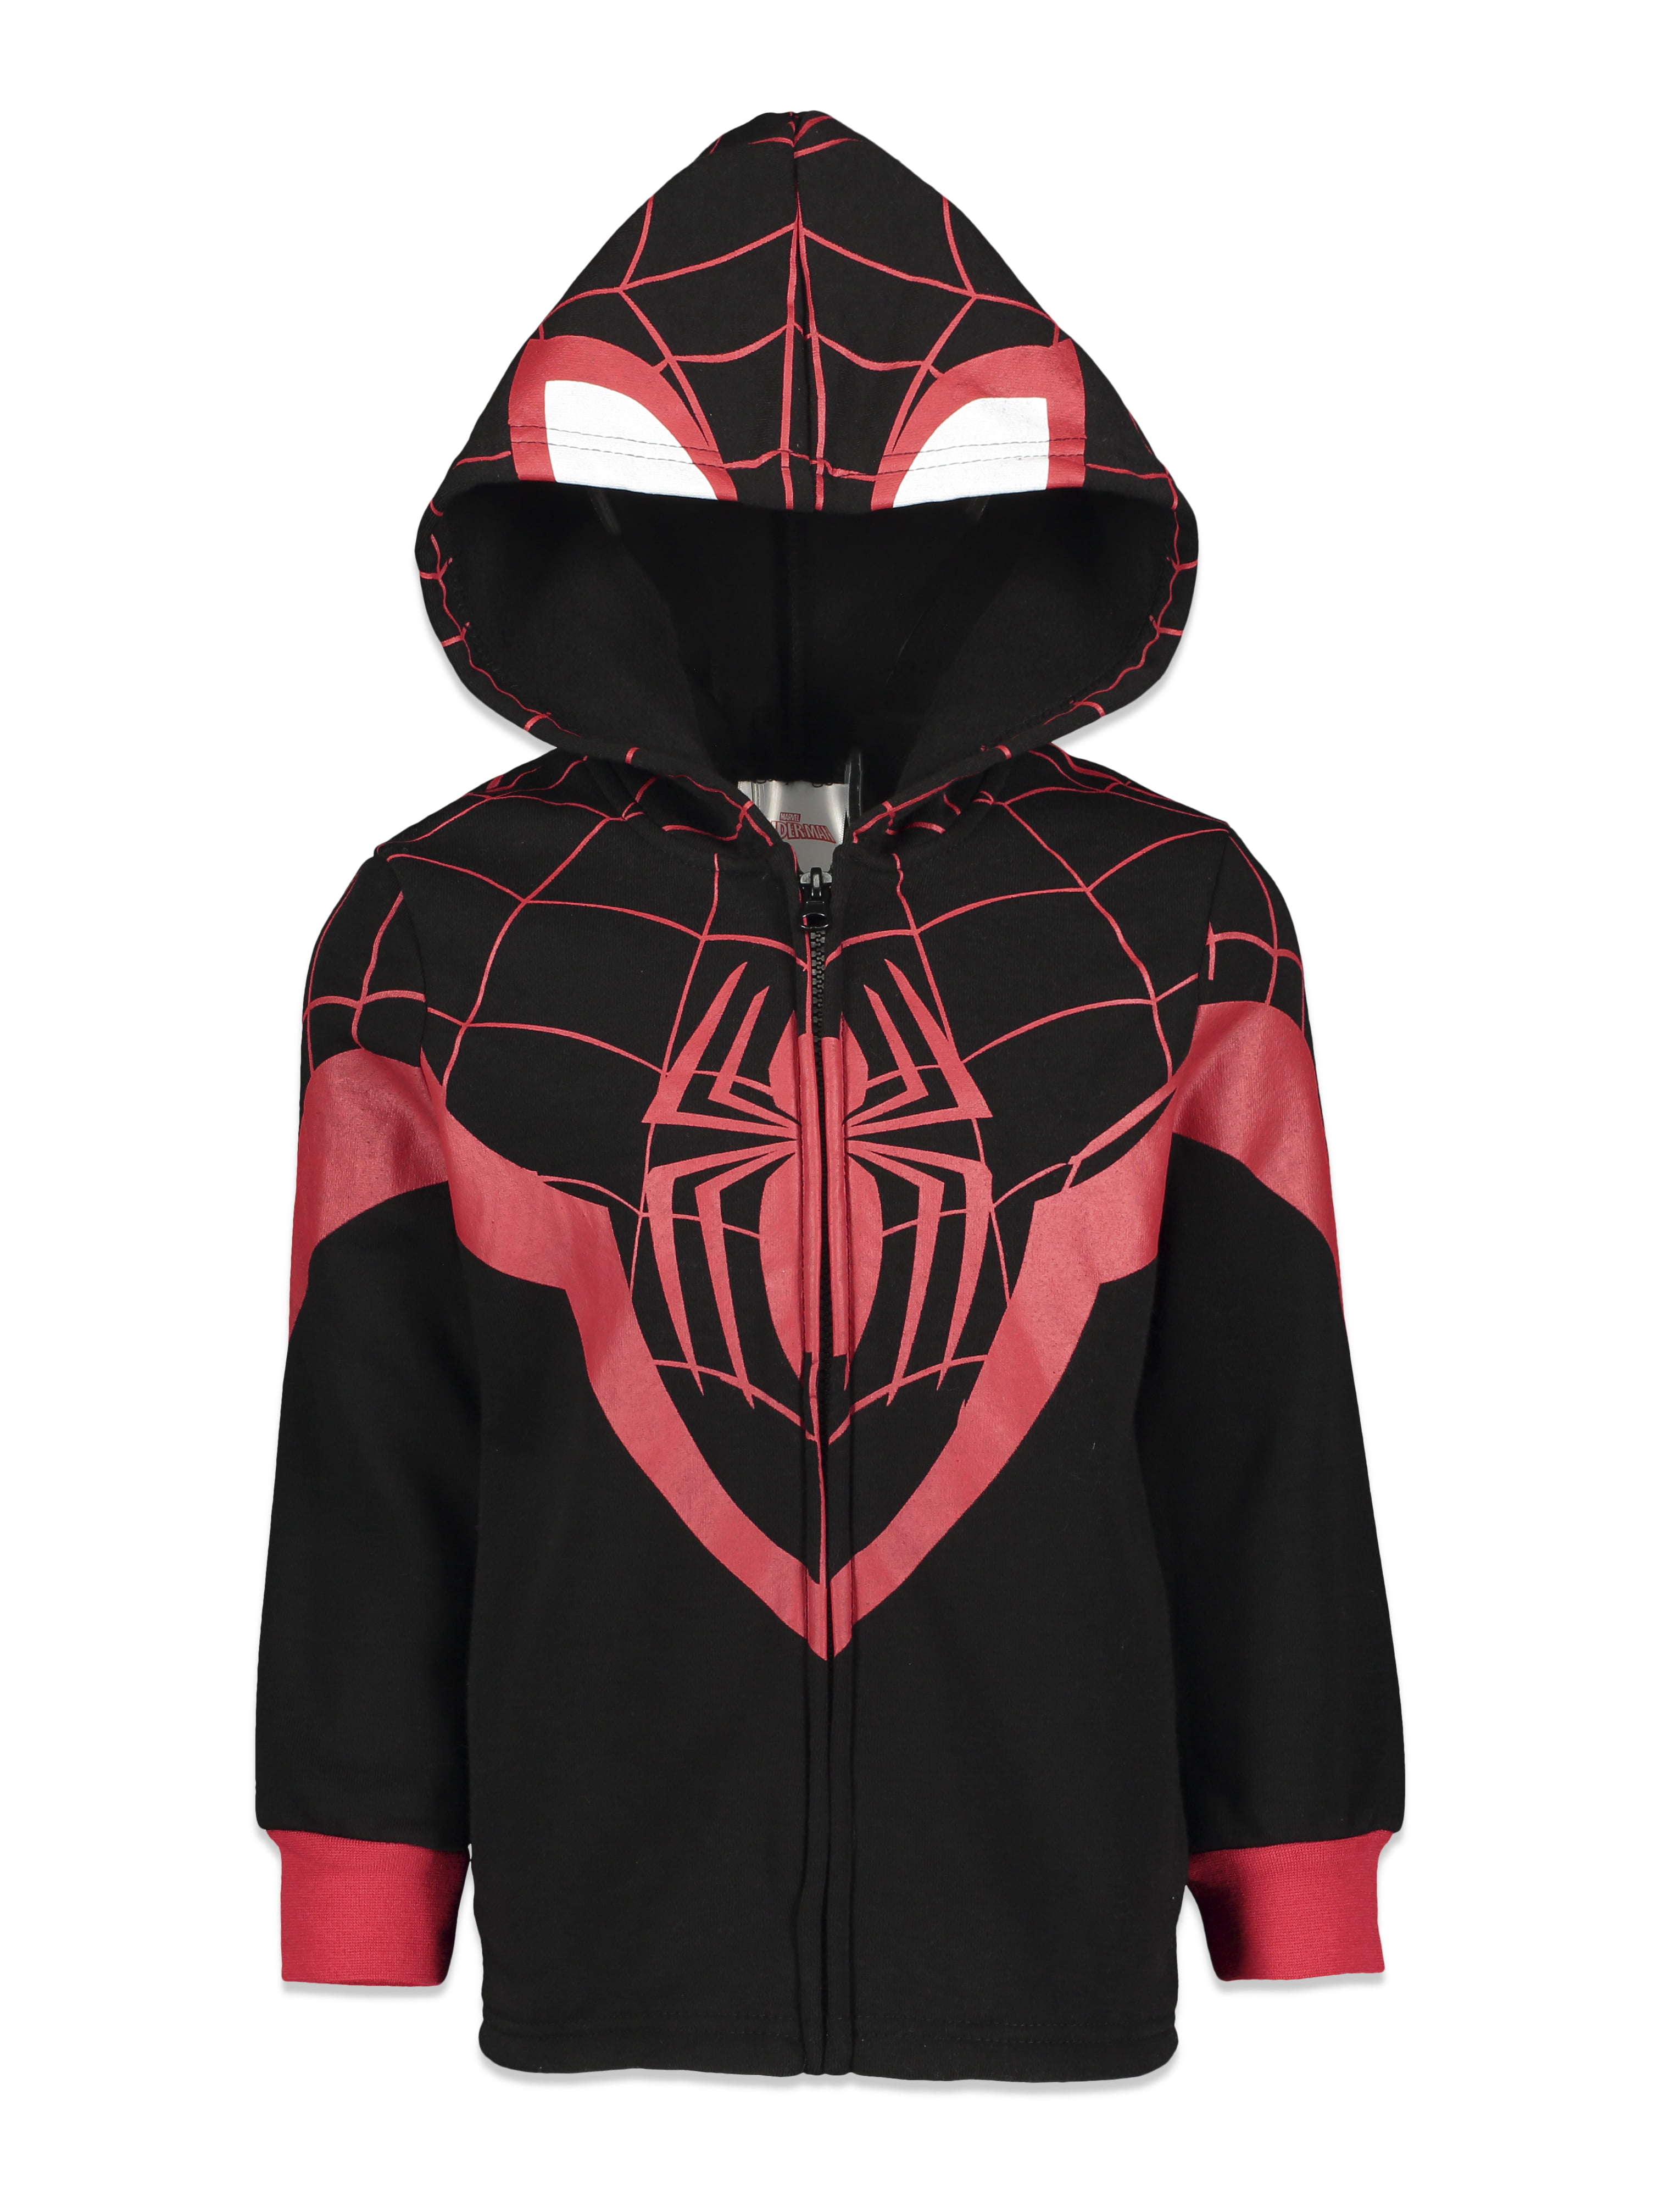 Spider-Man Miles Morales Into the Spider-Verse Hoodie Zip up Jacket Sweatshirt